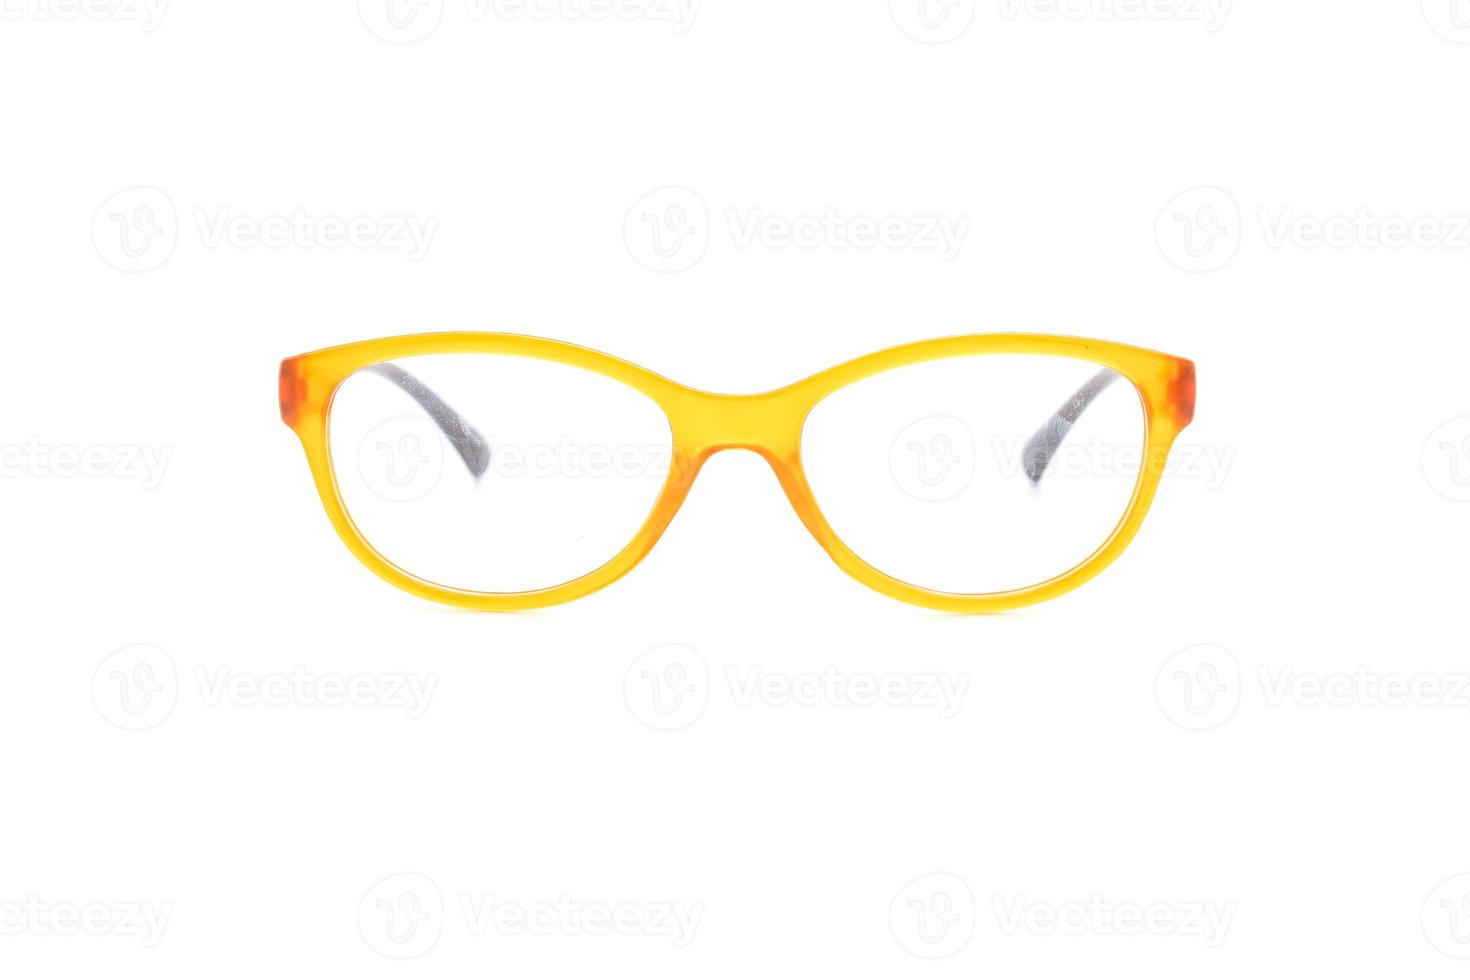 Eyeglasses, spectacles, or glasses on white background photo